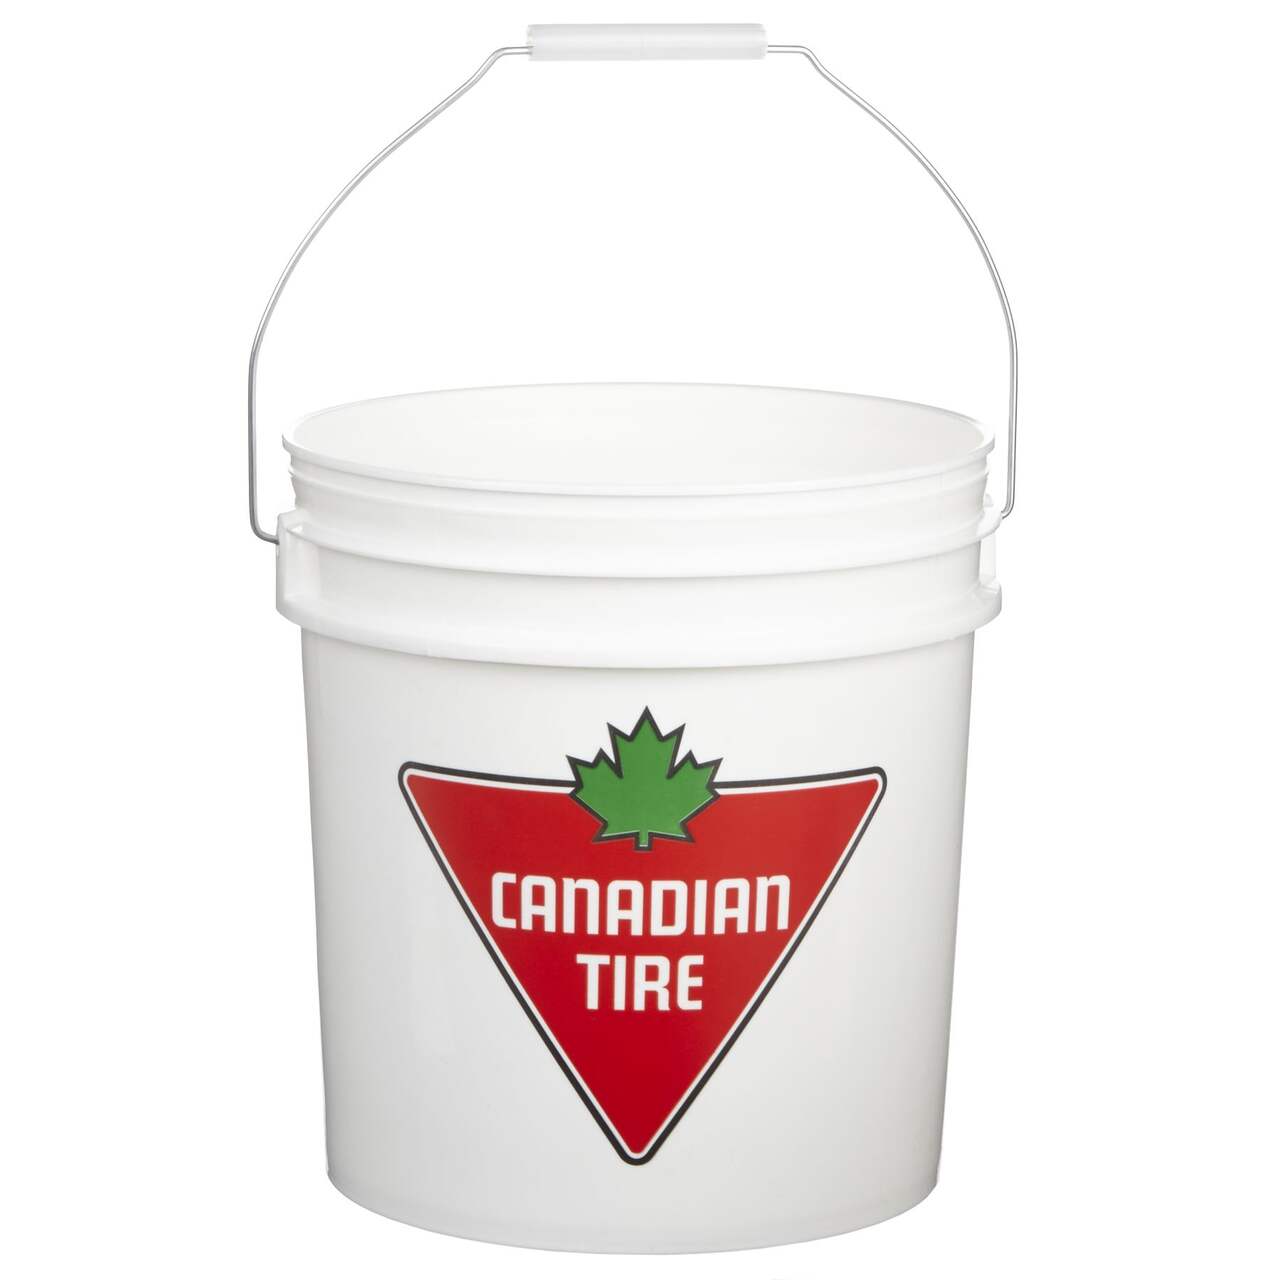 Canadian Tire Plastic Food Grade Safe Bucket, 5-Gal/19-L